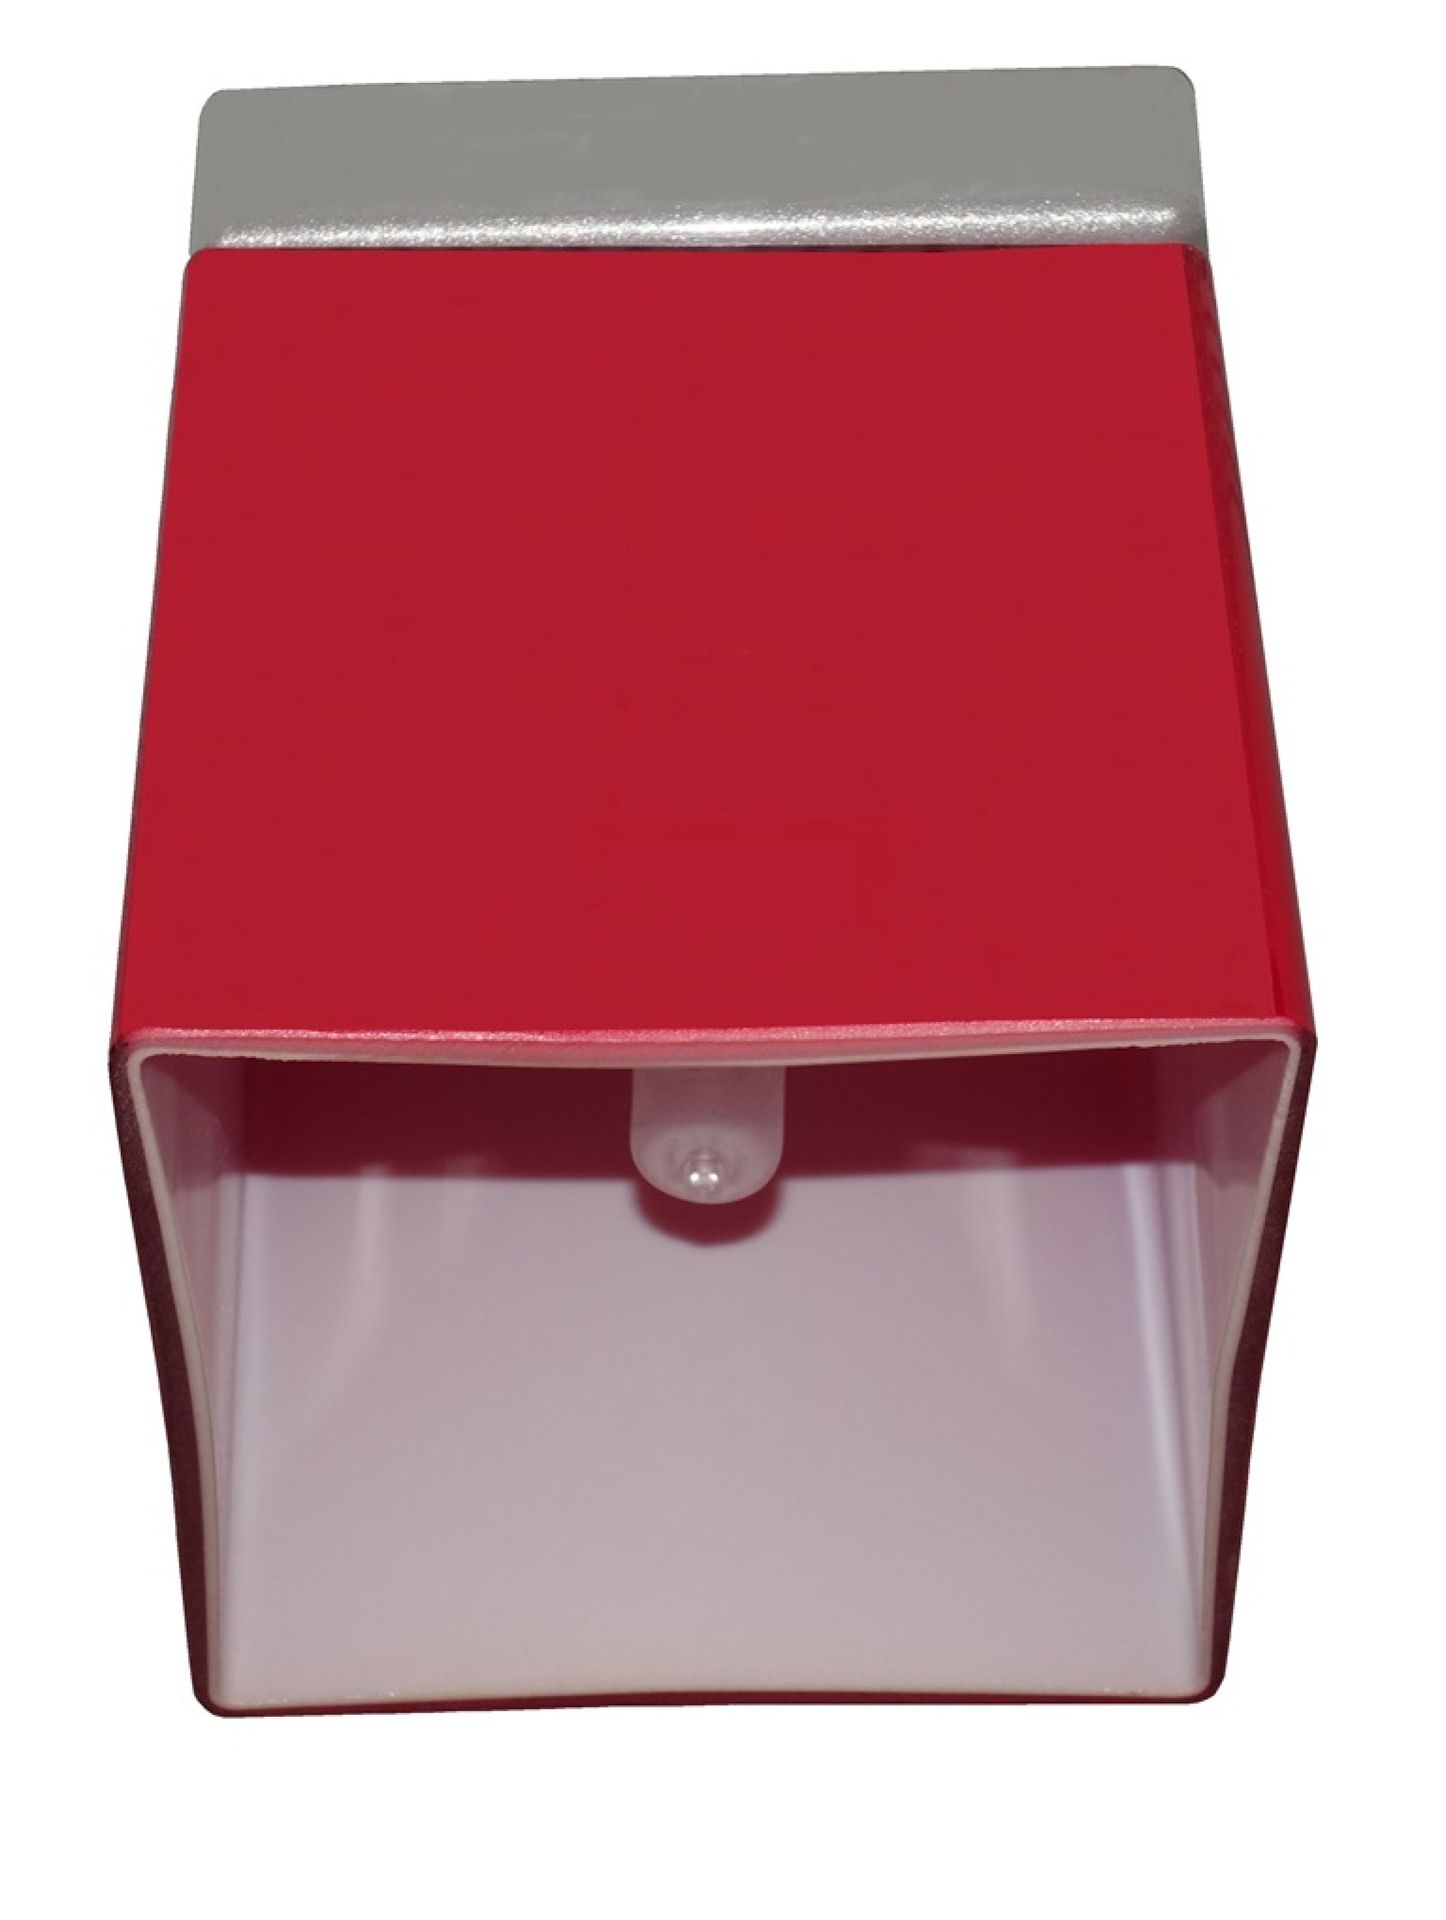 Null ICE吸顶灯
制造商。拉路斯
1 x 60W G9 金属和红色玻璃 
高度：11厘米11厘米；长度：9厘米；宽度：9厘米 
展览模型，零售价150欧元&hellip;